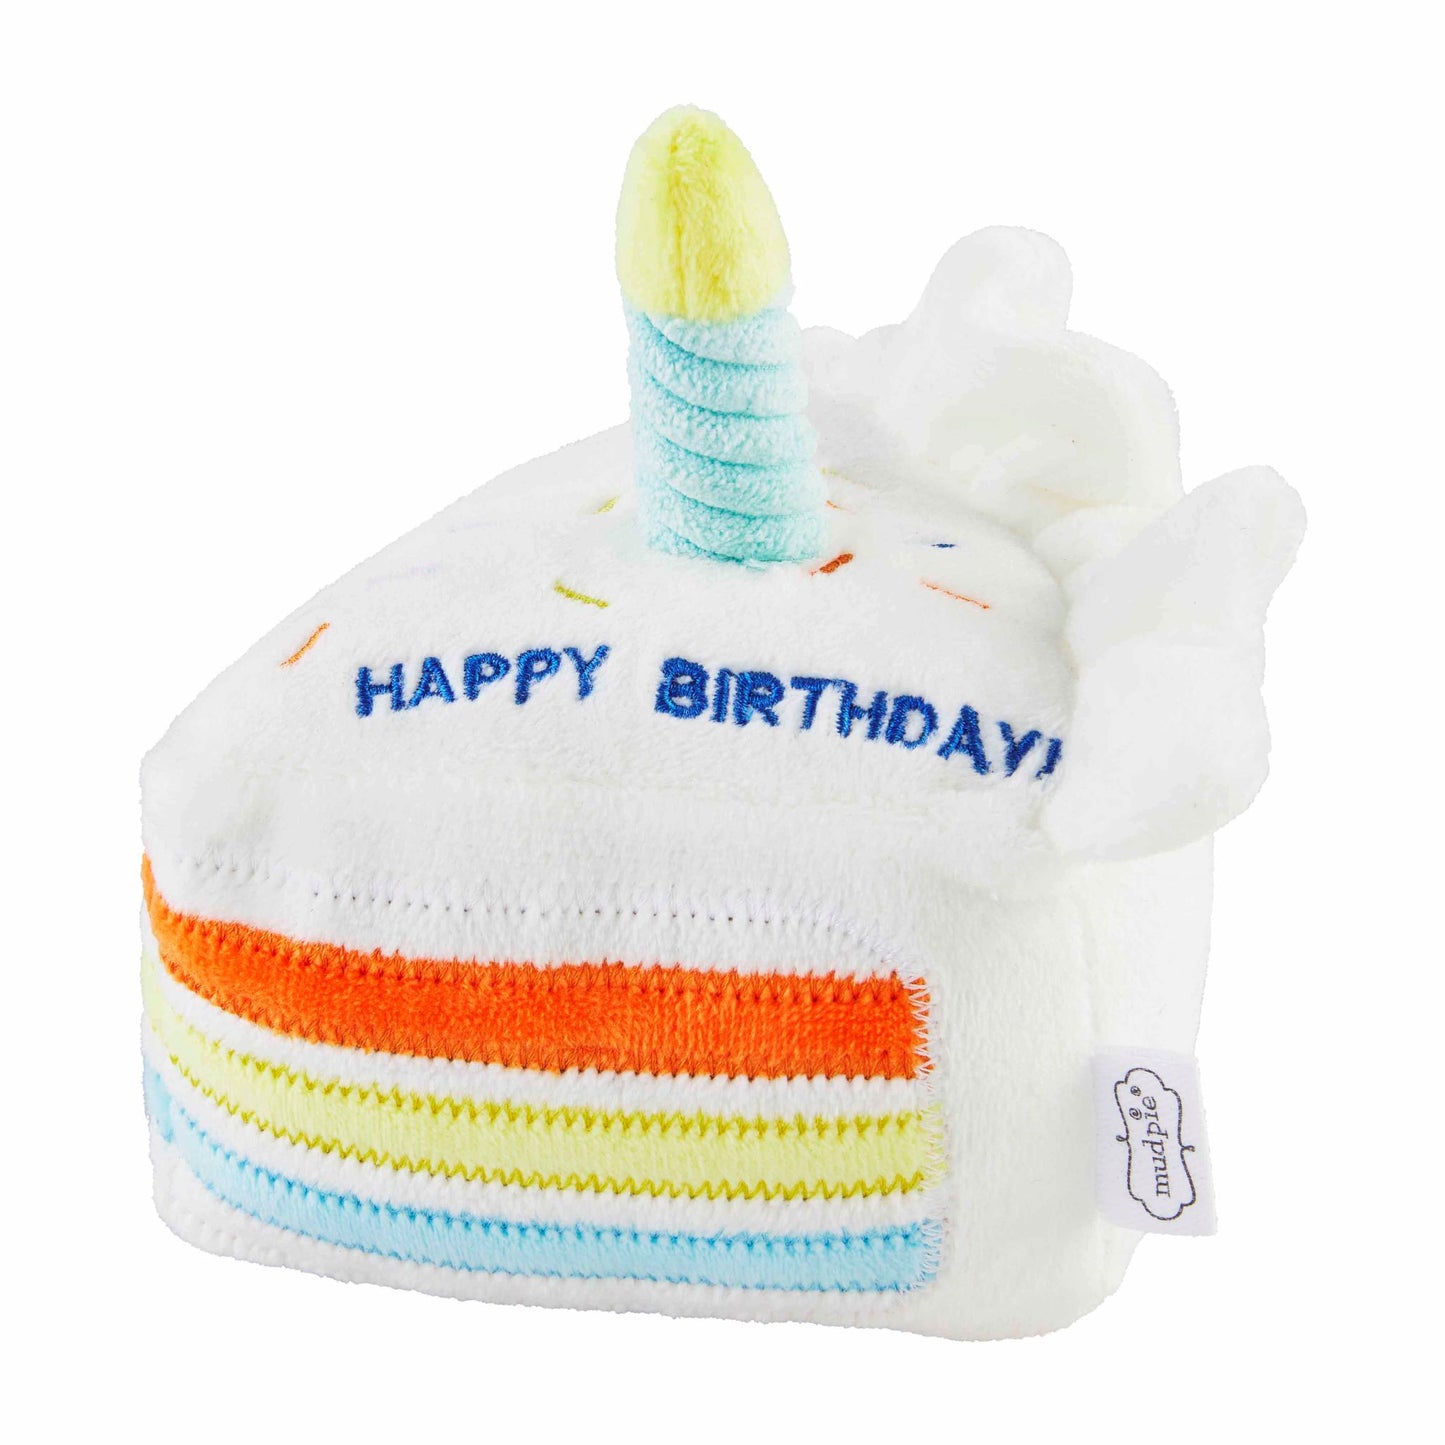 Multi-Color Musical Birthday Cake